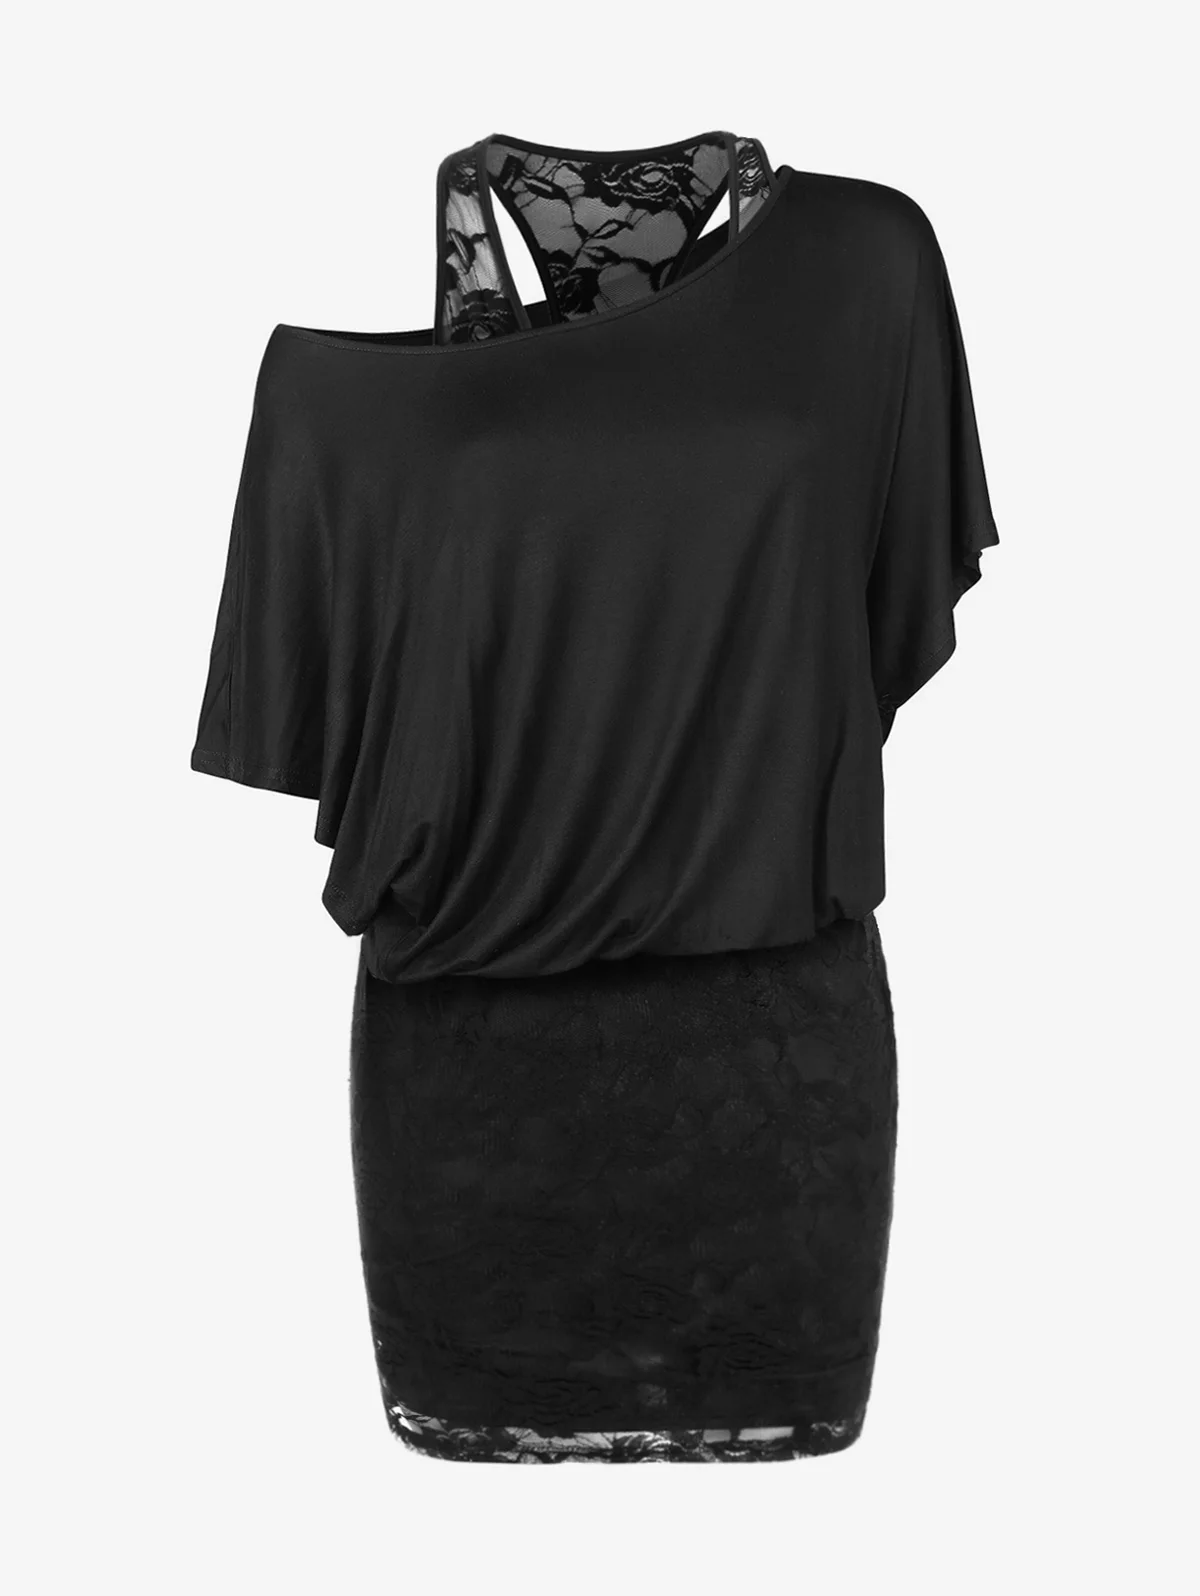 

ROSEGAL Skew Neck Blouson Bodycon Dresses Ladies Summer Faux Twinset Business Office Batwing Sleeve Mini Dress Black